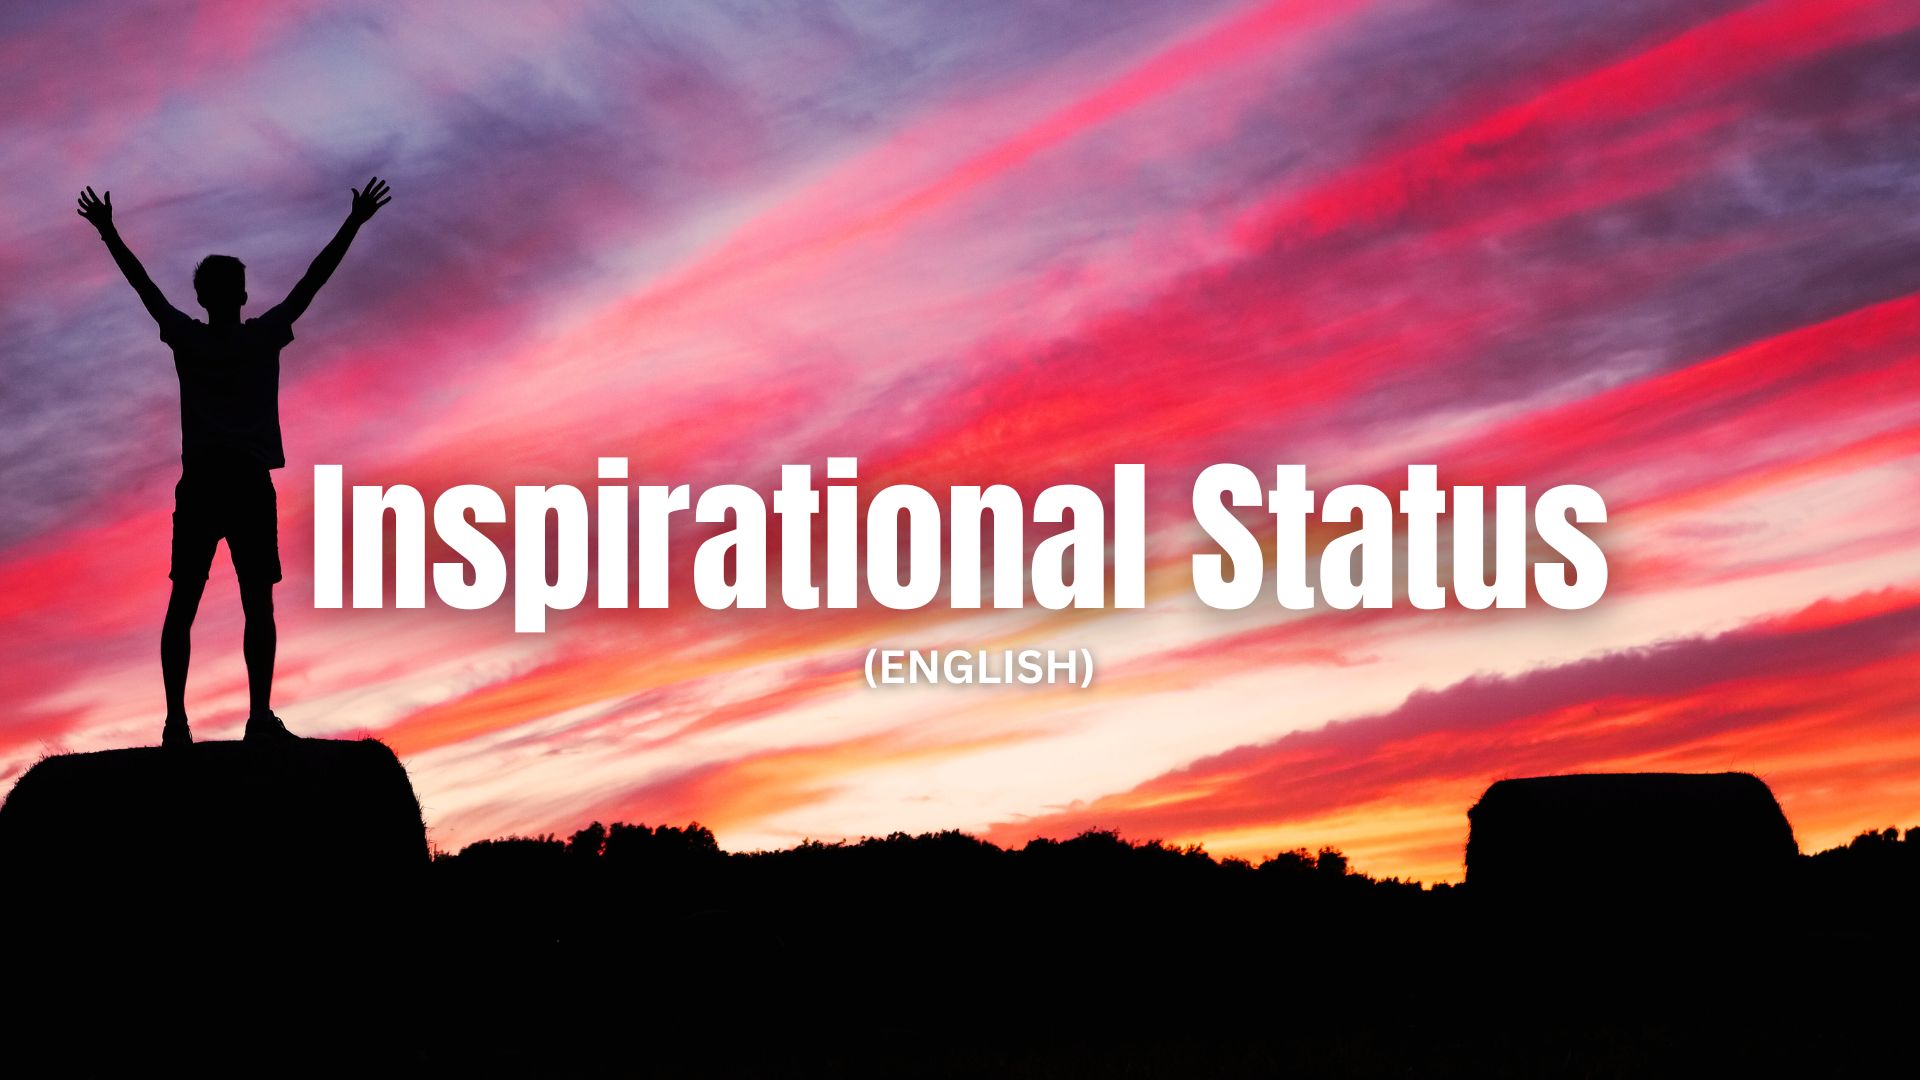 Inspirational Status in English